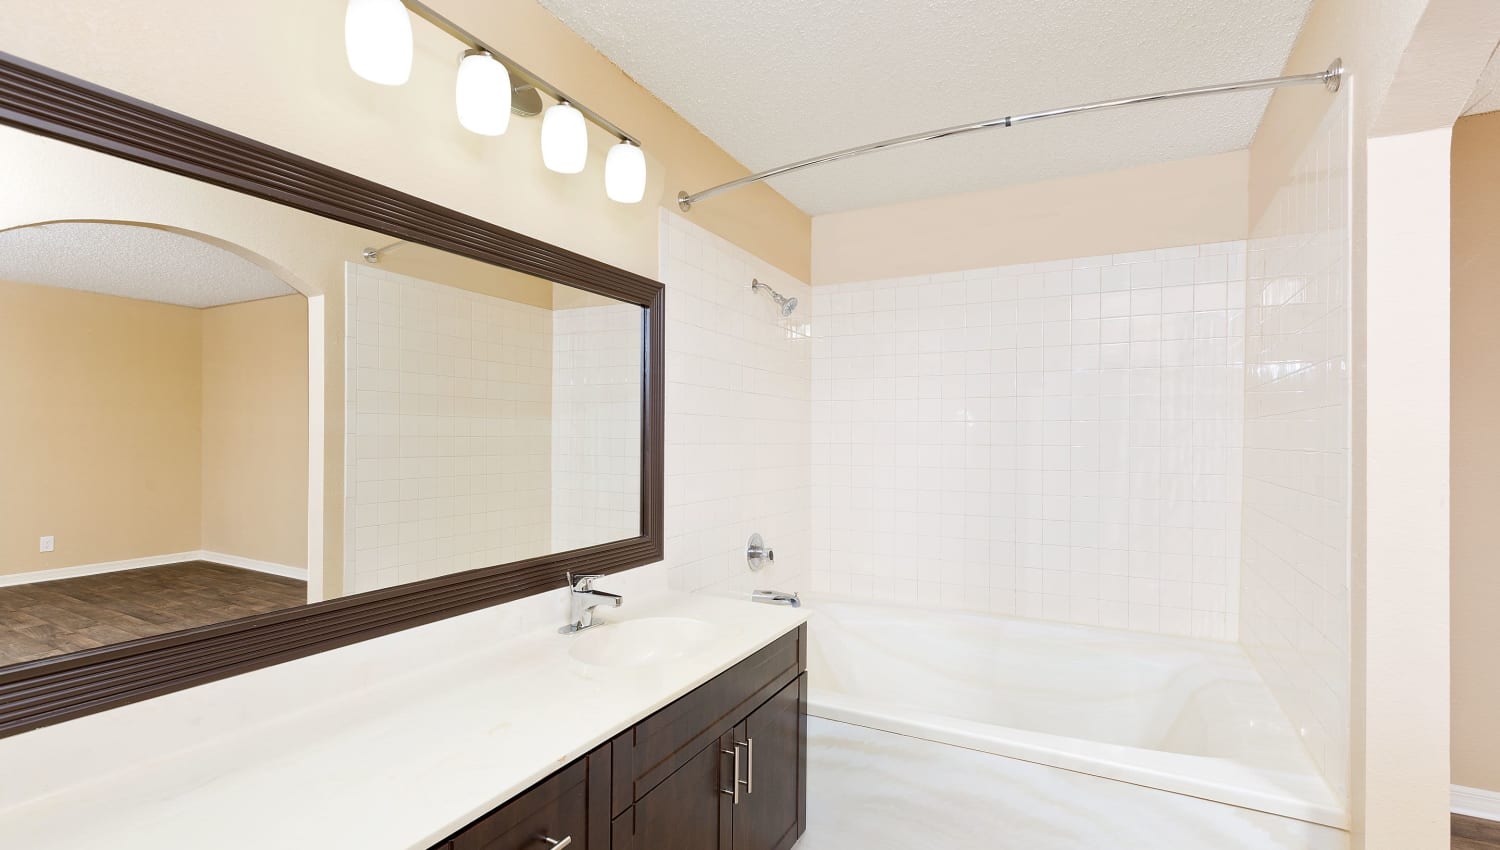 Model of main bathroom in apartment at Whalers Cove Apartments in Boynton Beach, Florida